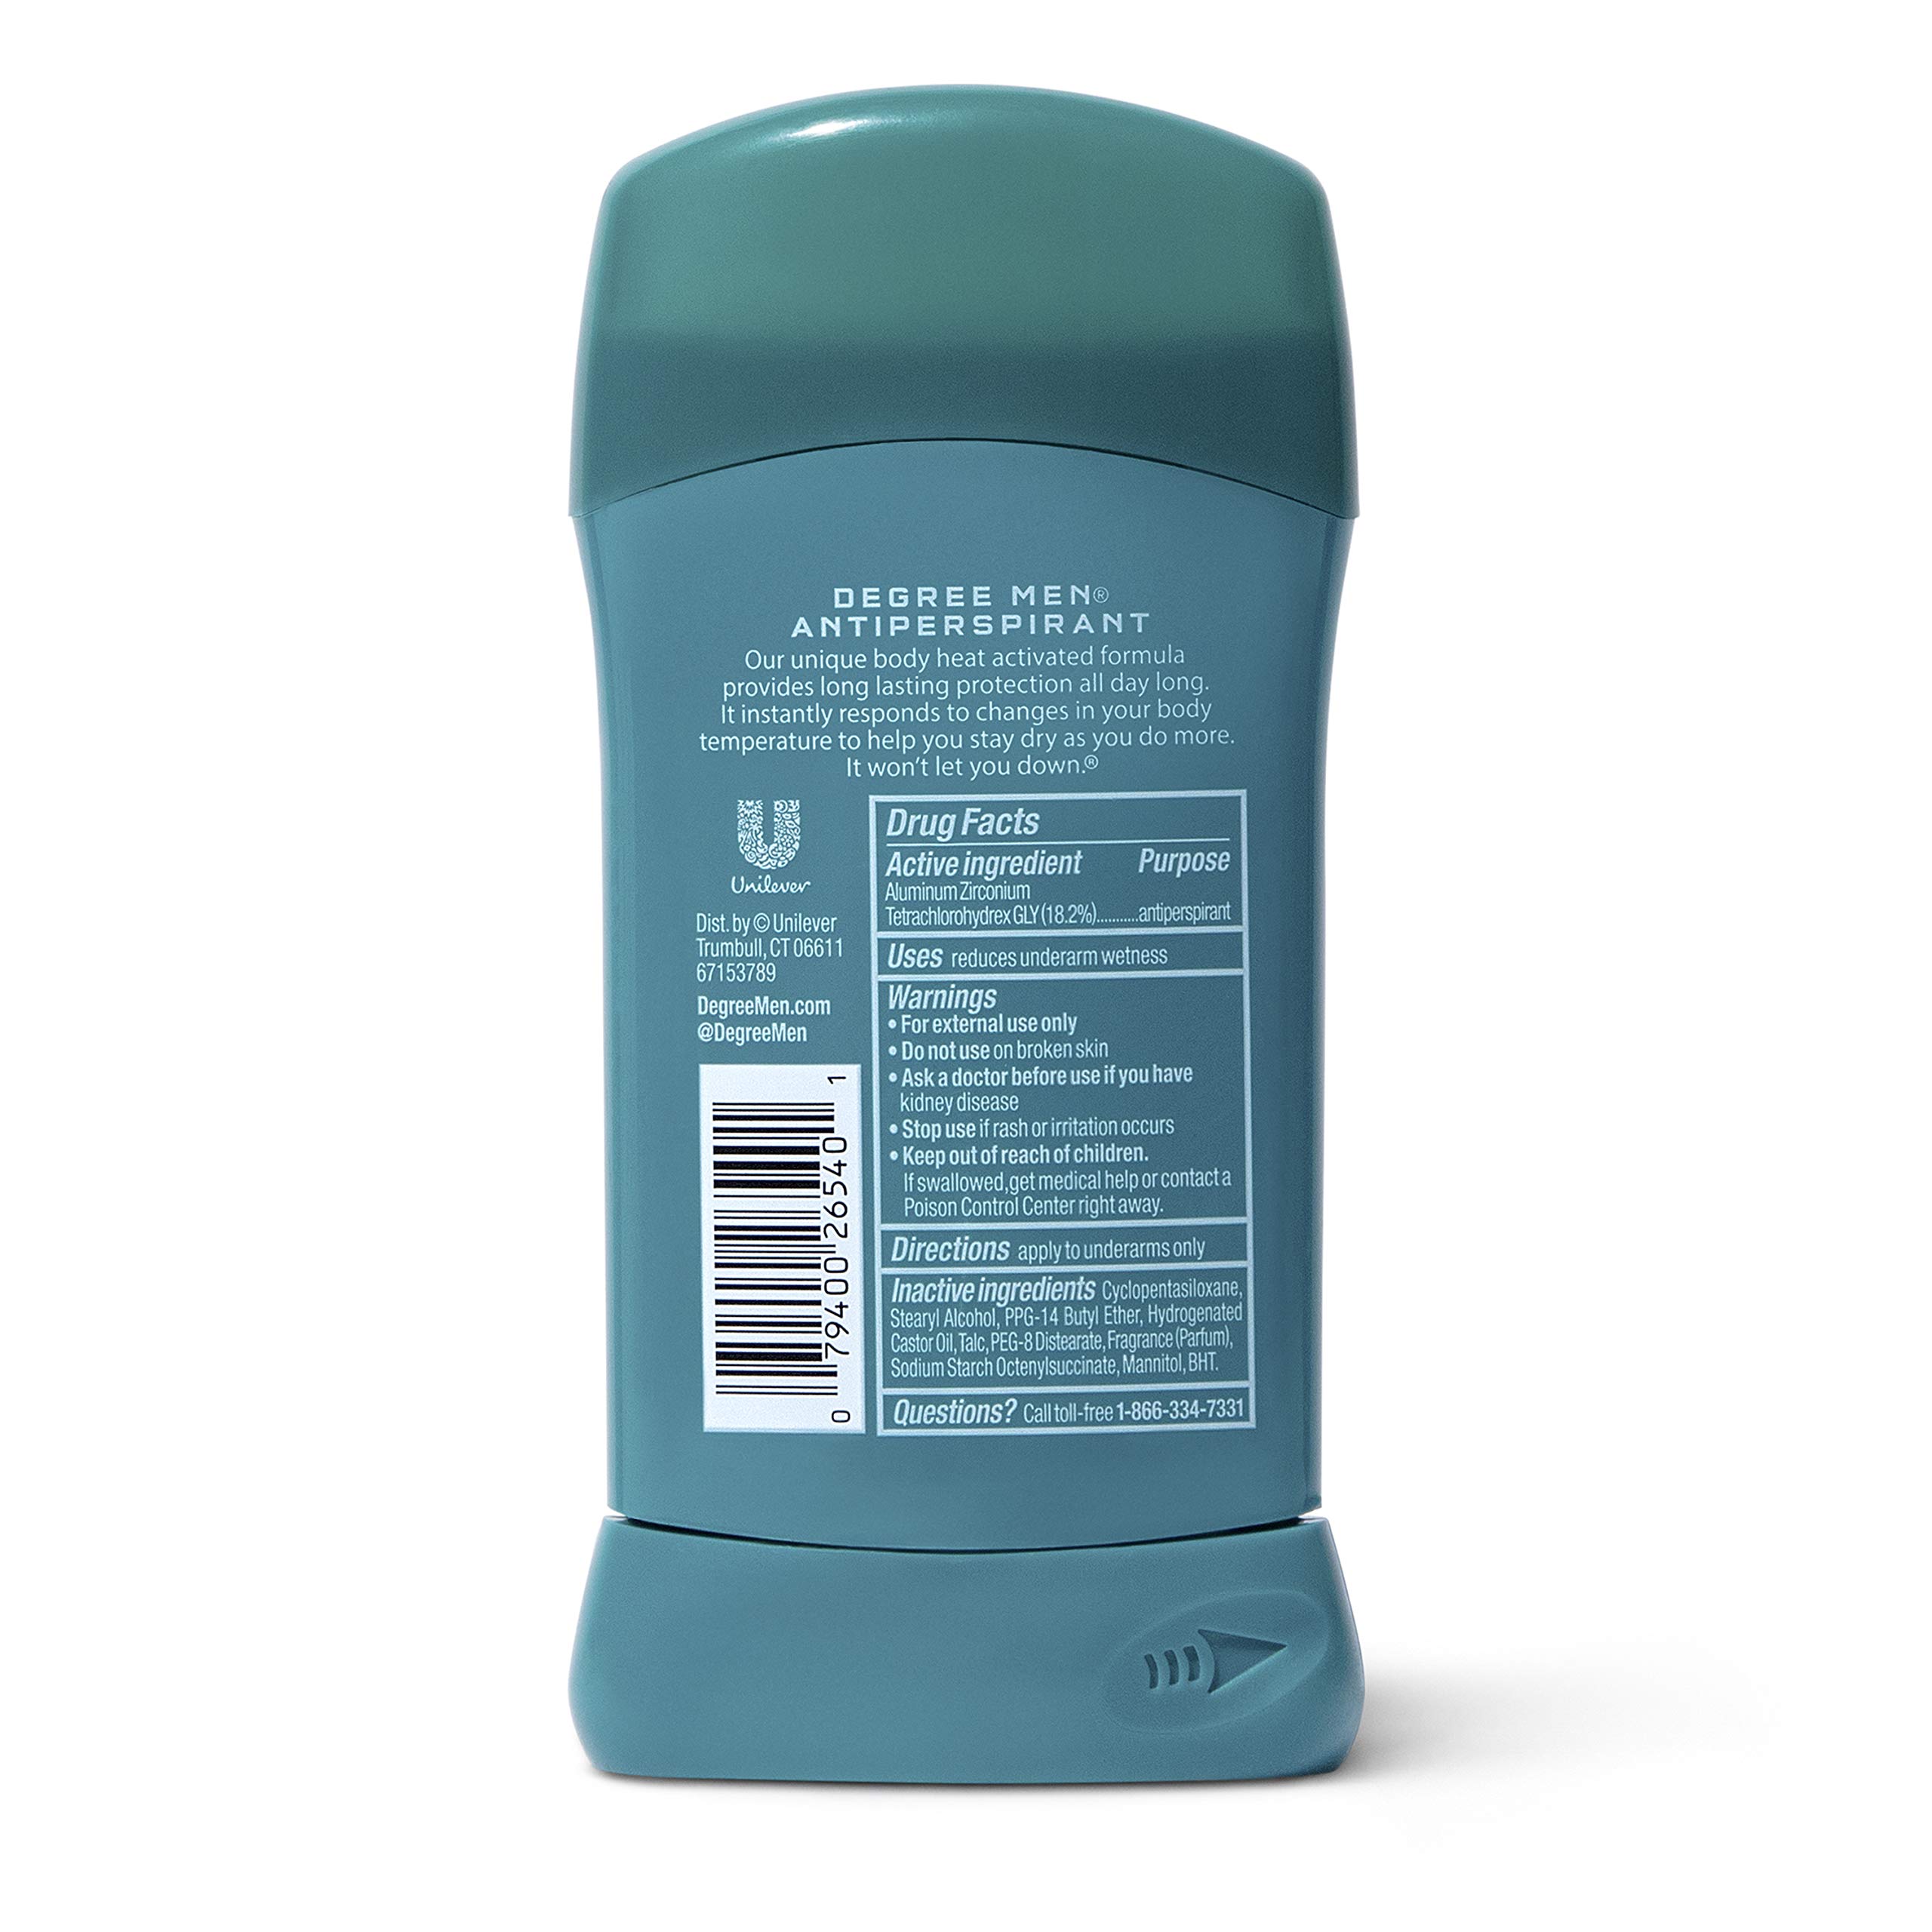 Degree Men Antiperspirant Deodorant Stick Cool Rush 48 Hour Protection 2.7 oz